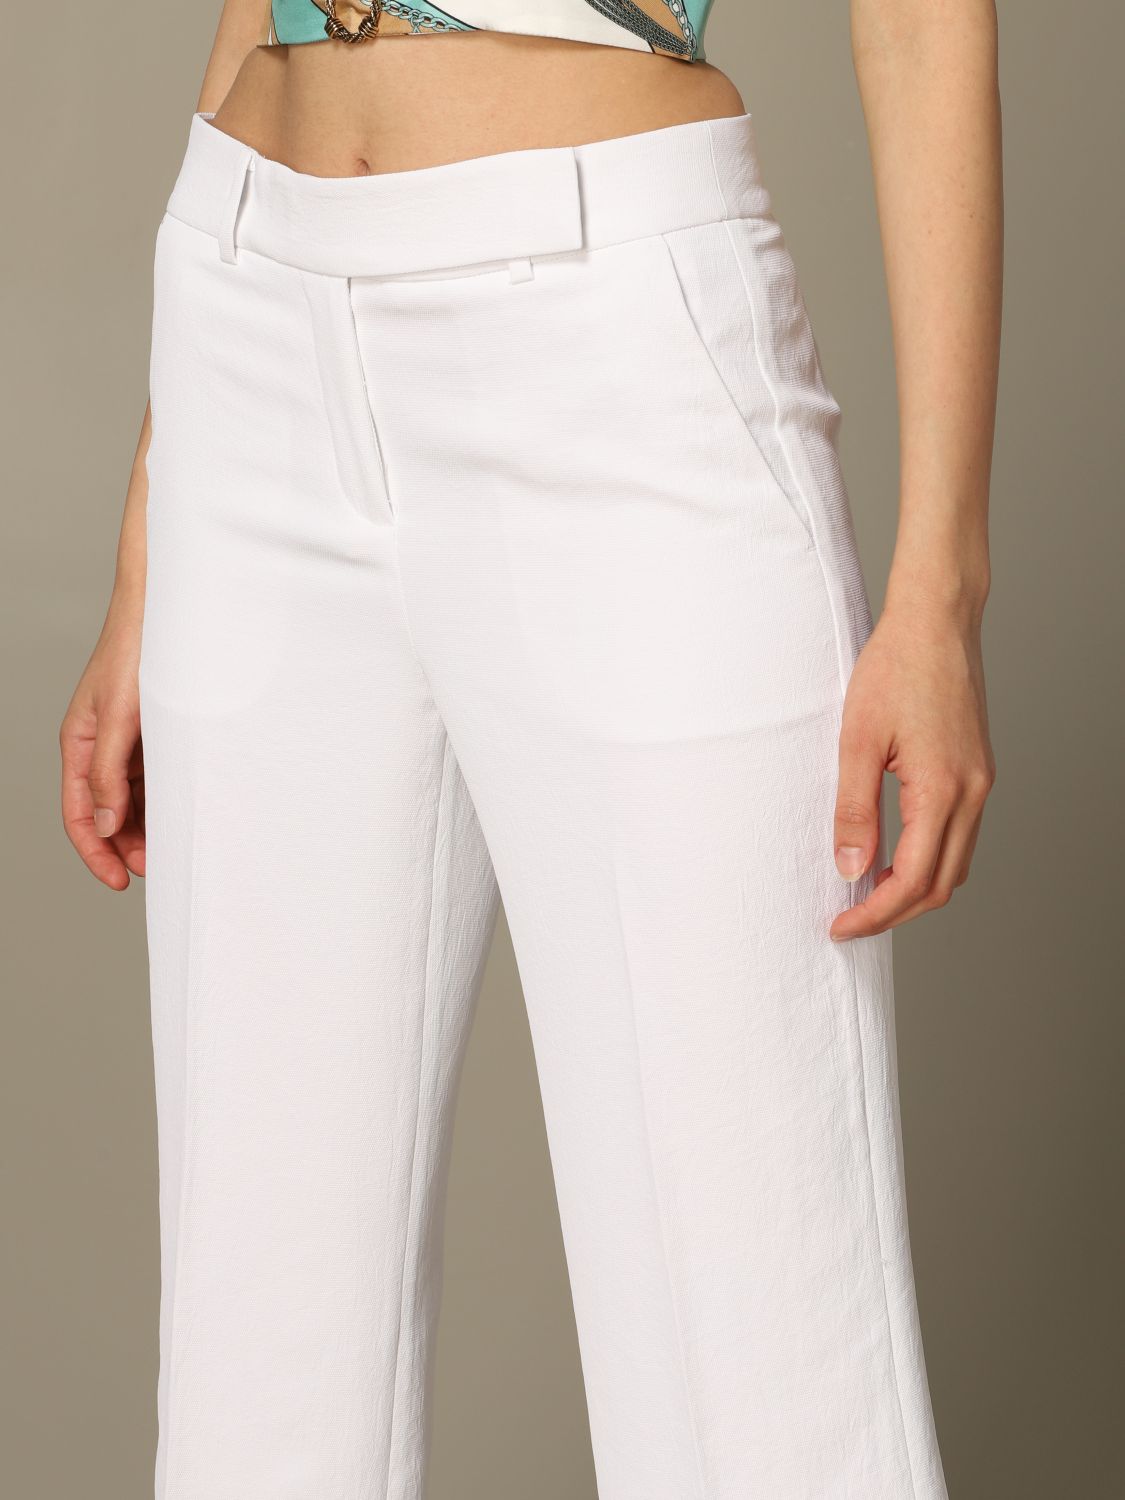 white michael kors pants